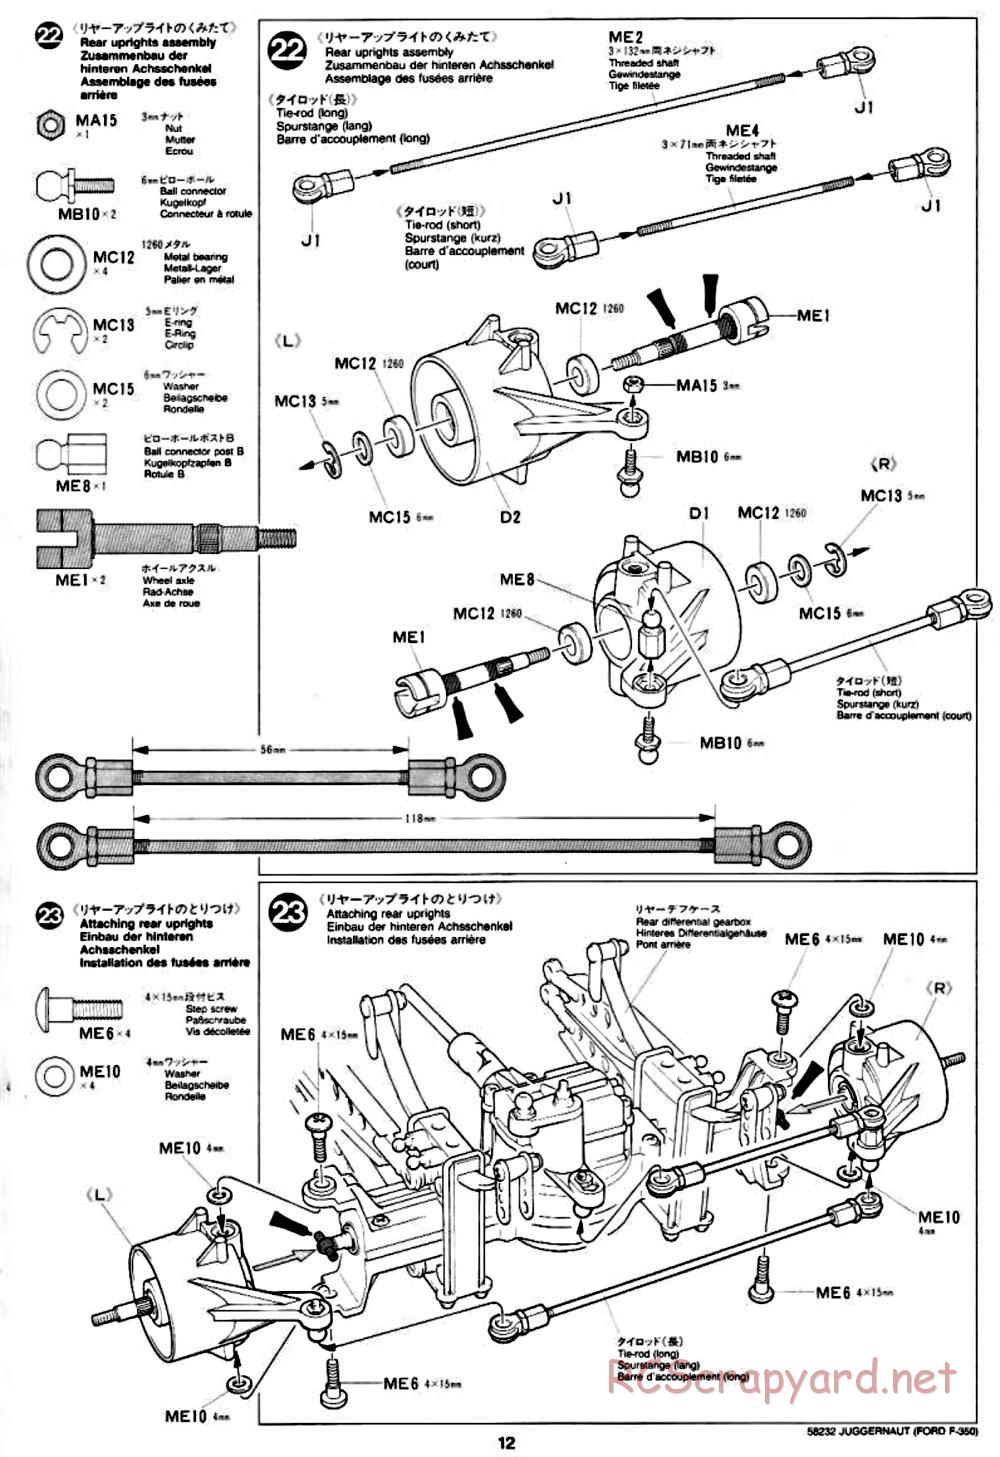 Tamiya - Juggernaut Chassis - Manual - Page 12